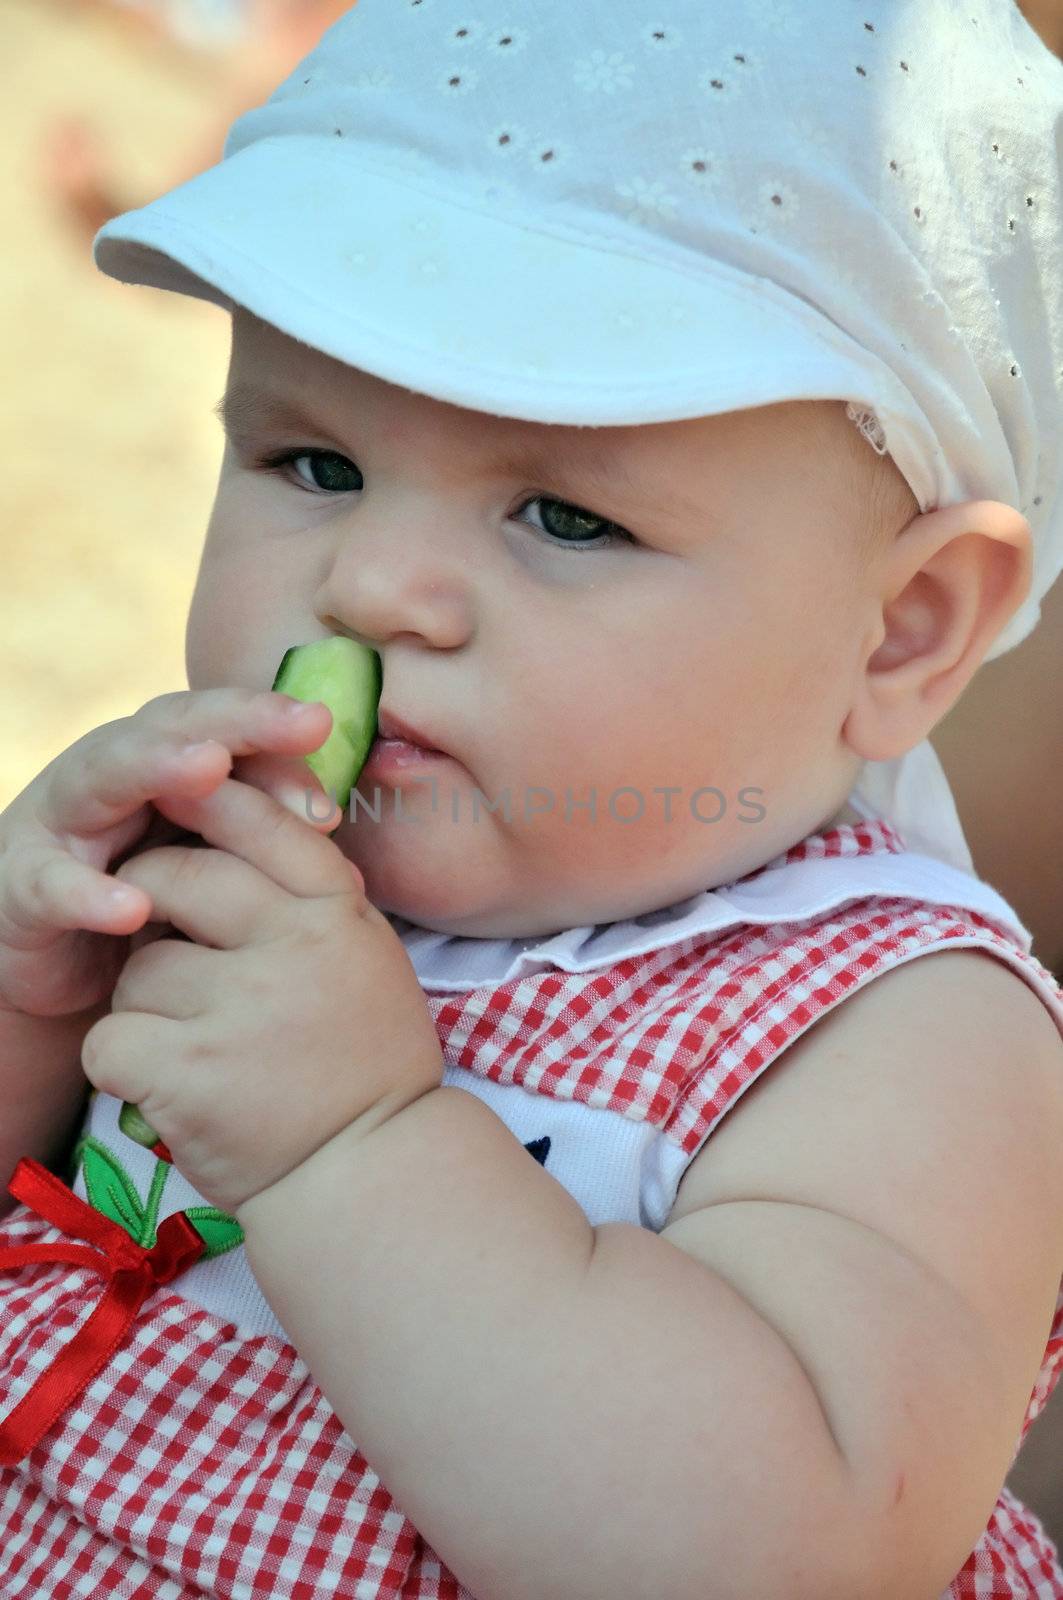 little baby girl is enjoying peace of cucumber